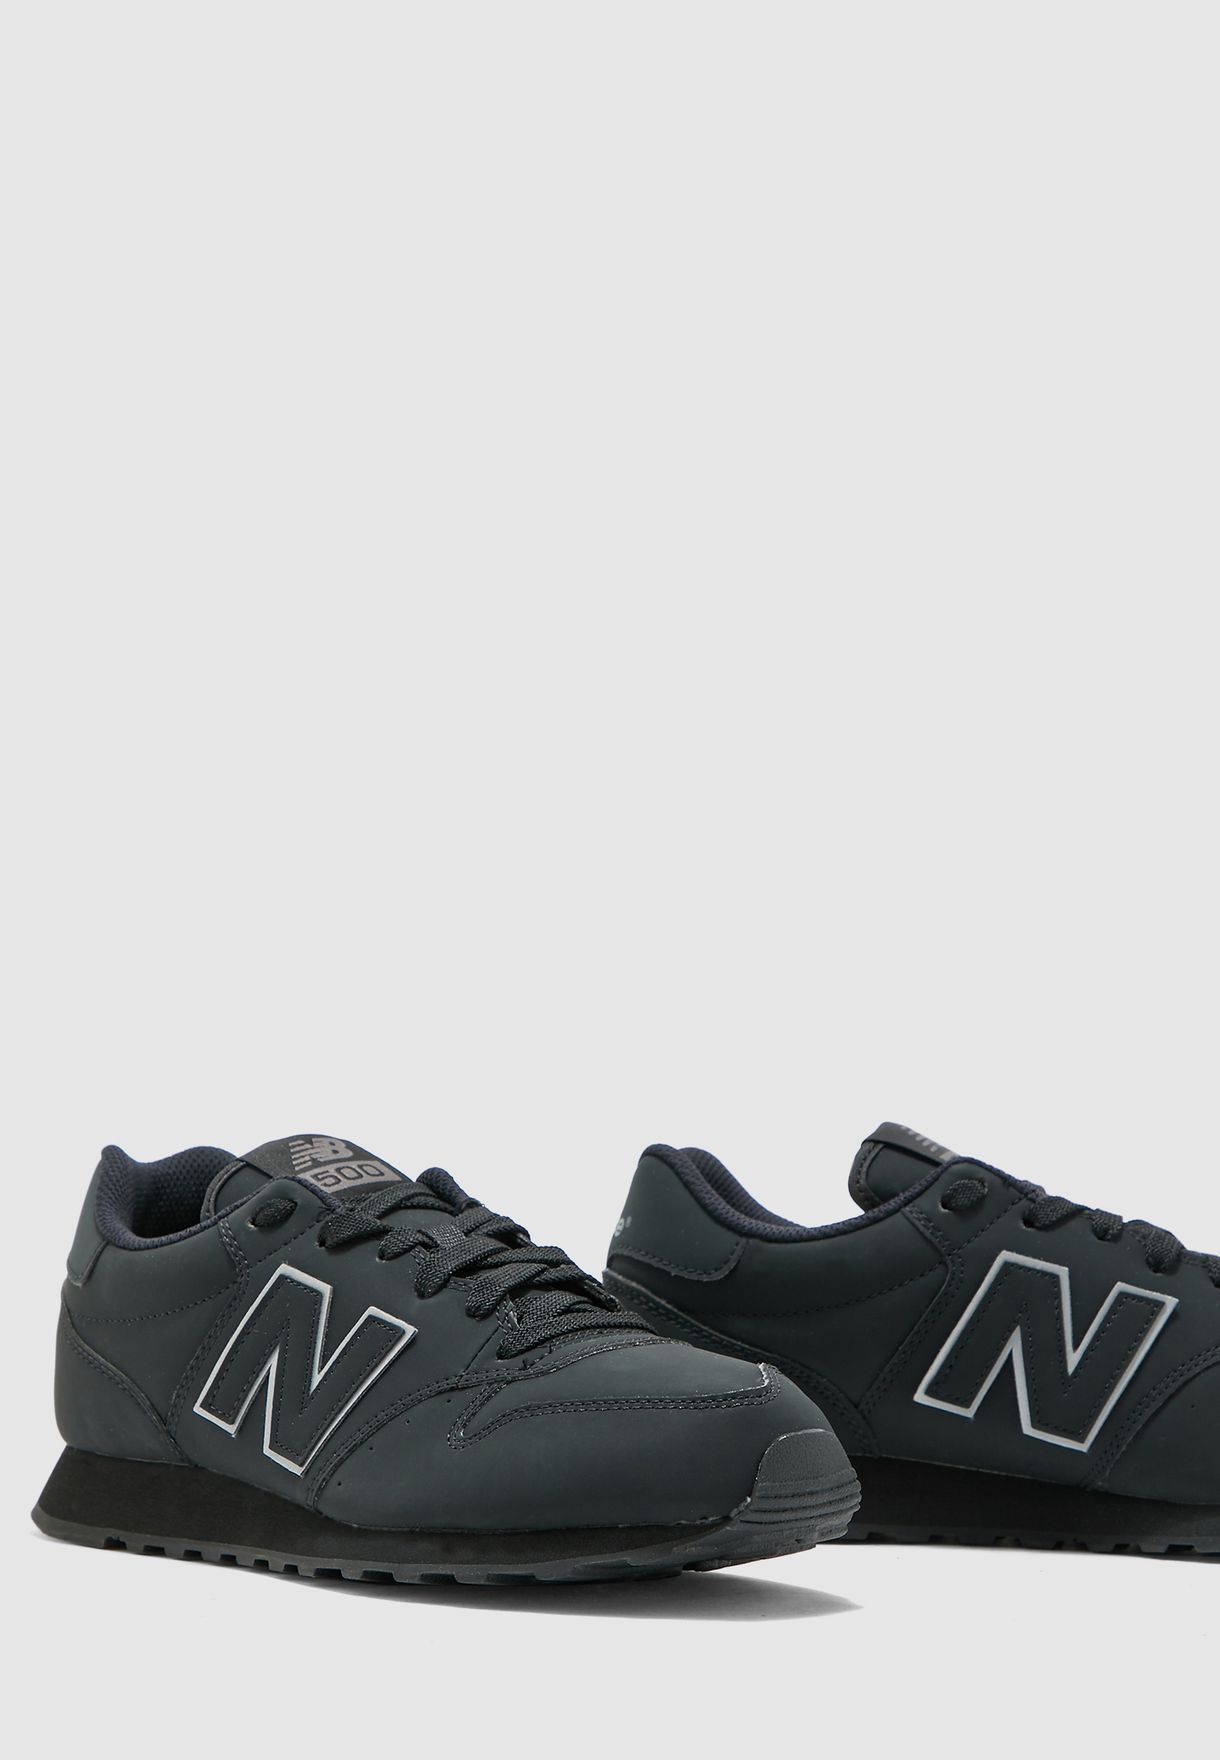 nb 500 black